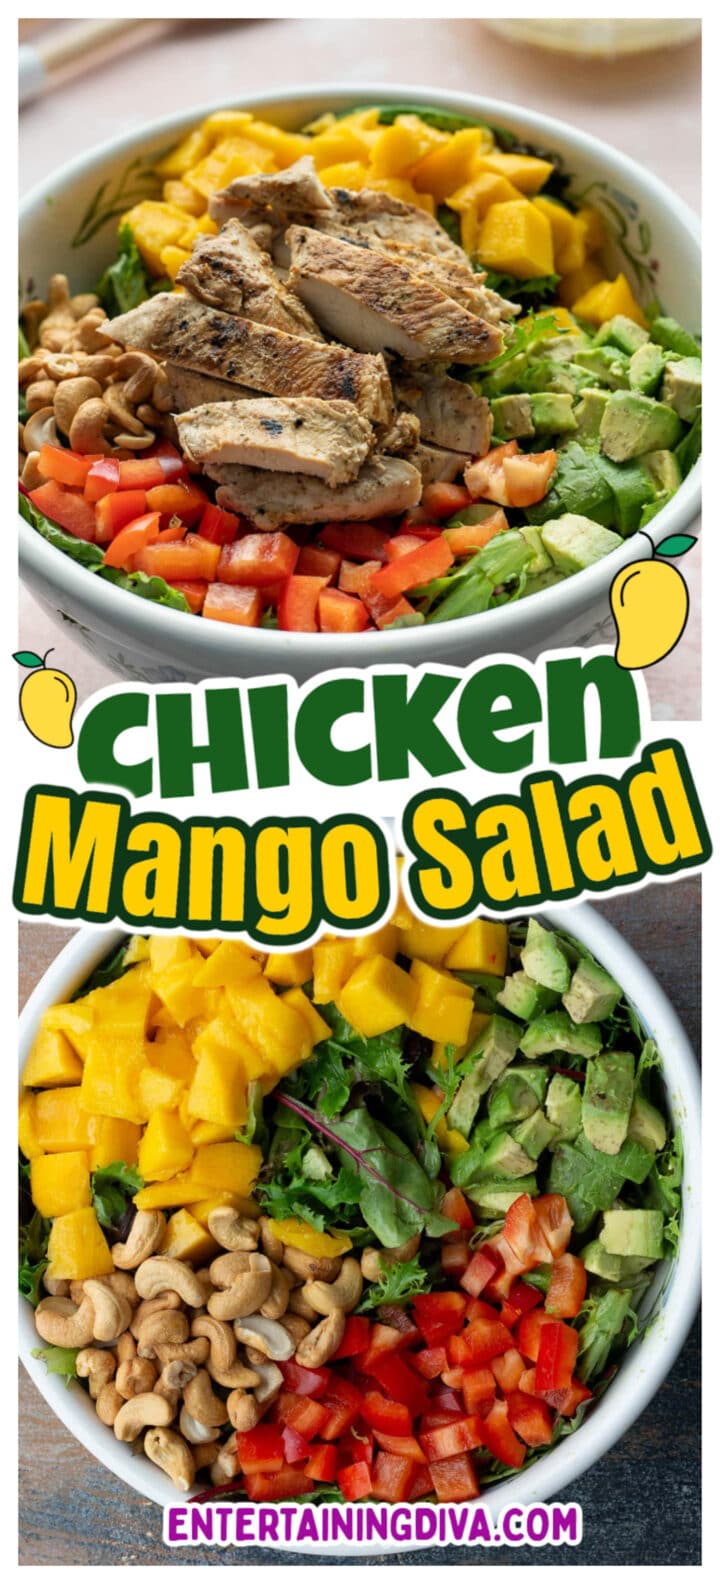 Grilled Chicken Avocado and Mango Salad